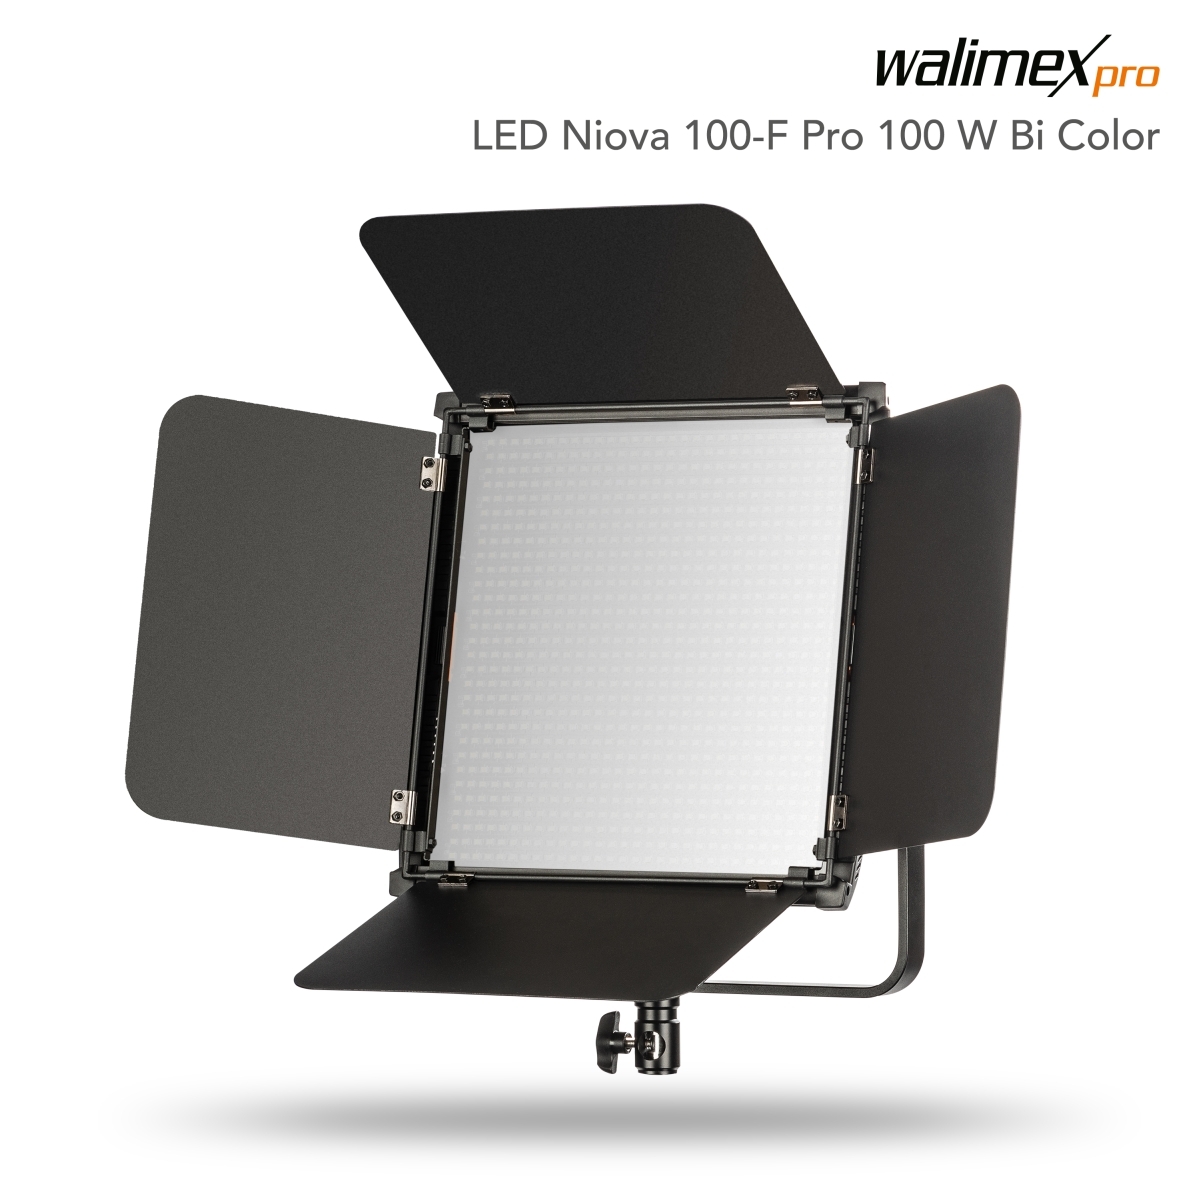 Walimex Pro LED Niova 100-F Pro 100W Bicolor